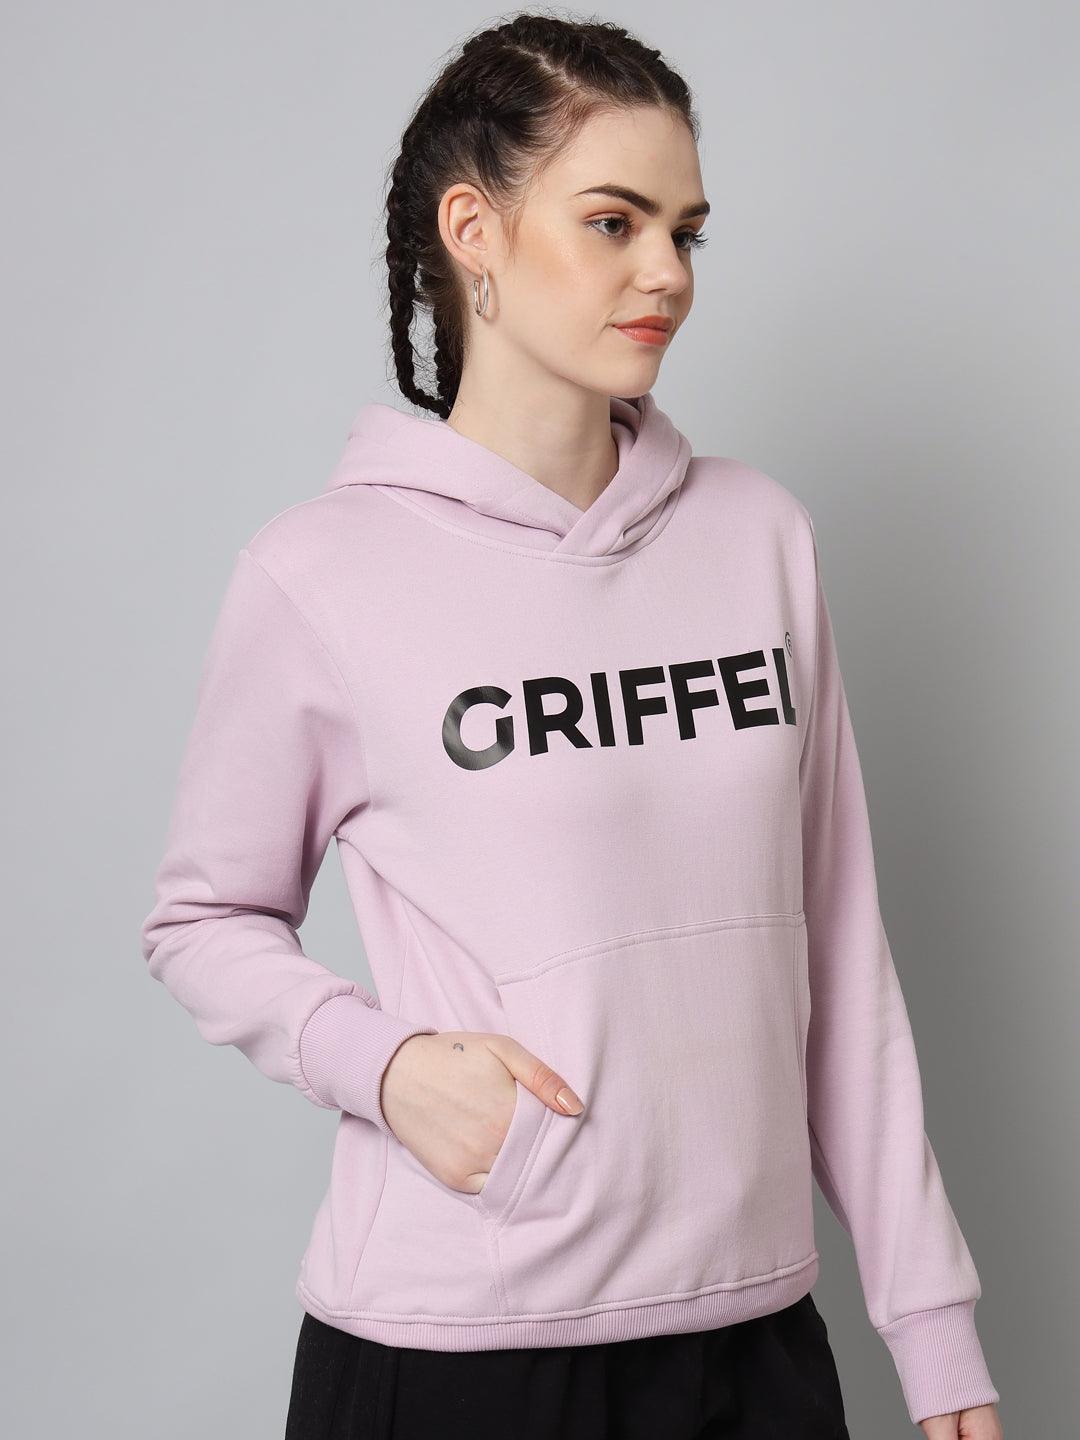 Griffel Women’s Cotton Fleece Full Sleeve Hoodie Light Purple Printed Sweatshirt - griffel